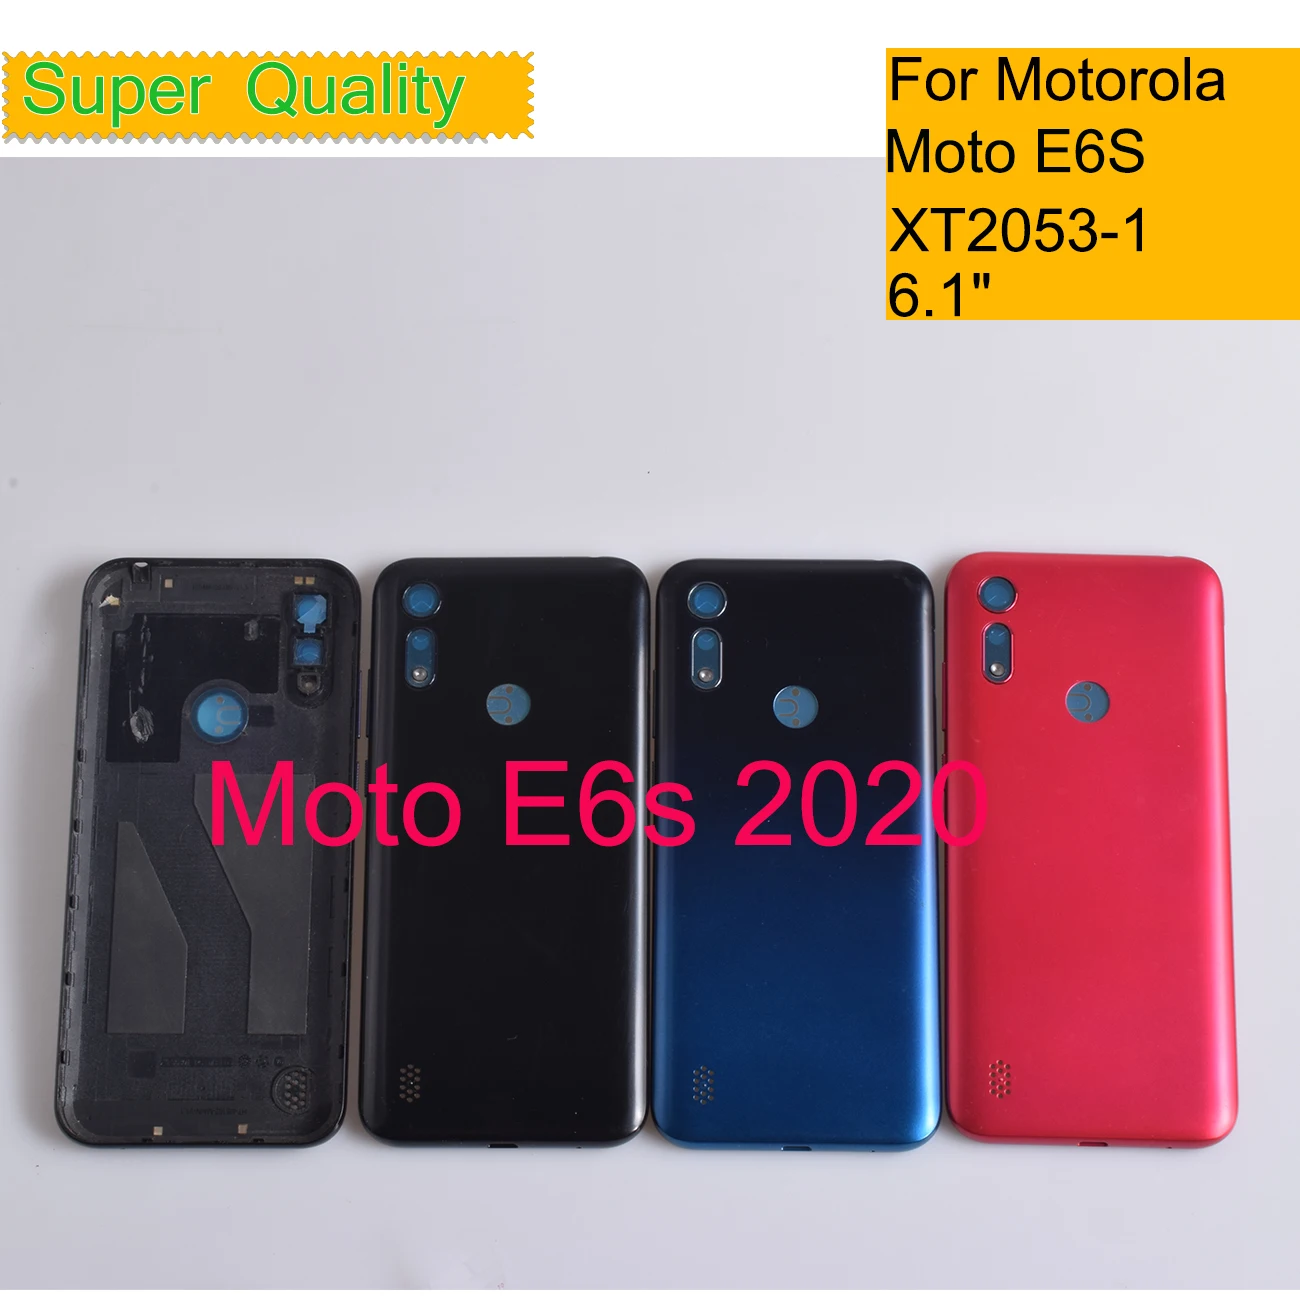 Carcasa de repuesto para Motorola Moto E6s 2020 XT2053-1, carcasa de batería, cubierta trasera, chasis de puerta trasera, XT2053-2, 10 unids/lote